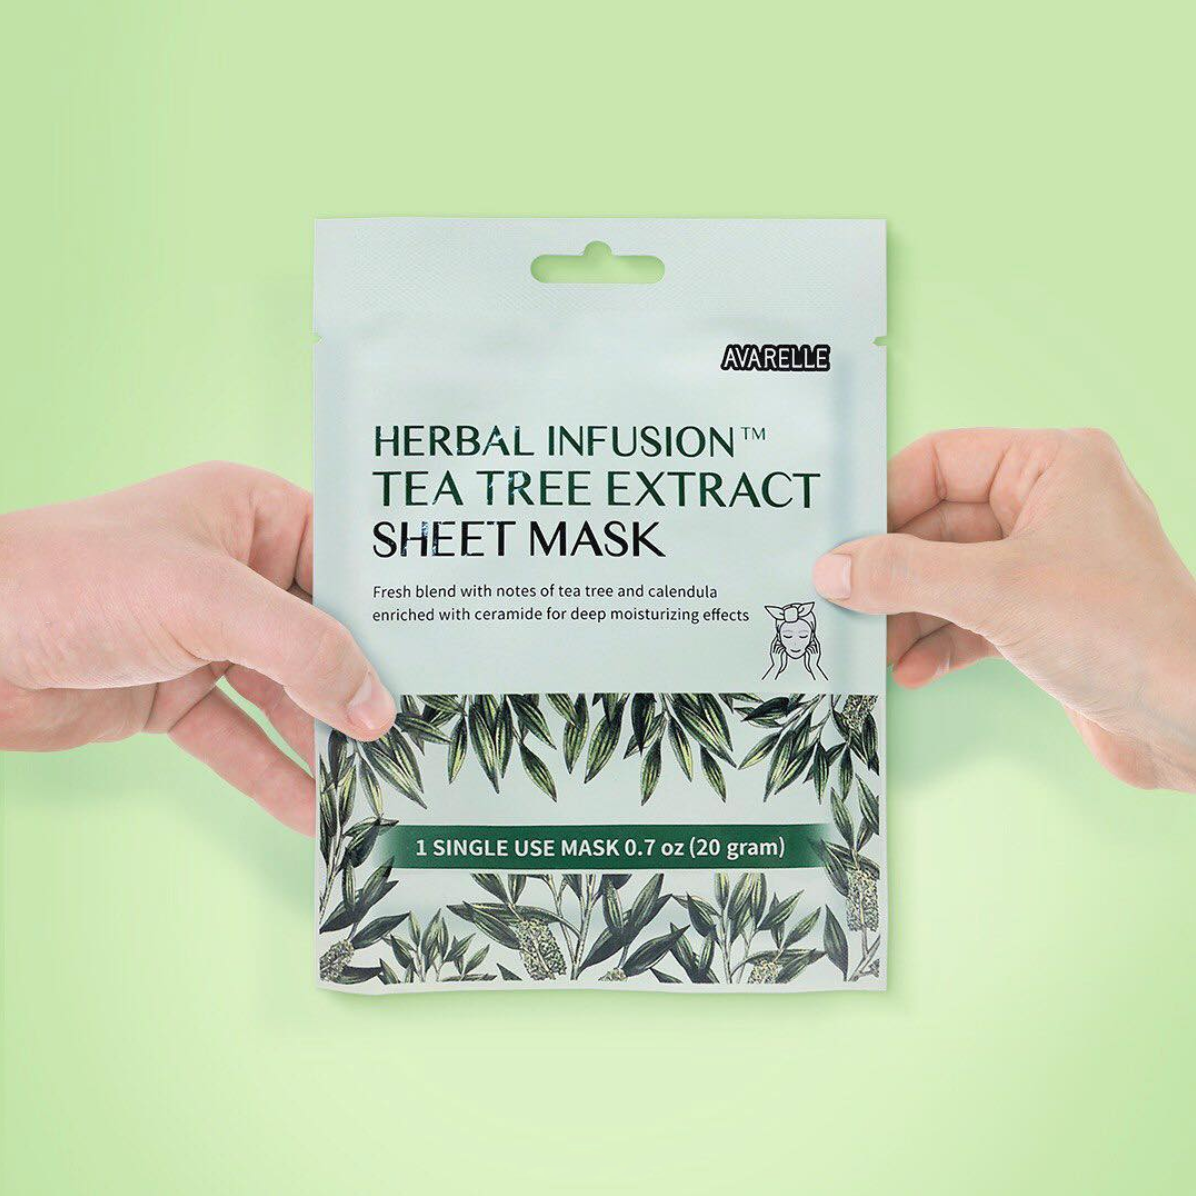 Herbal Infusion Sheet Mask $12.50